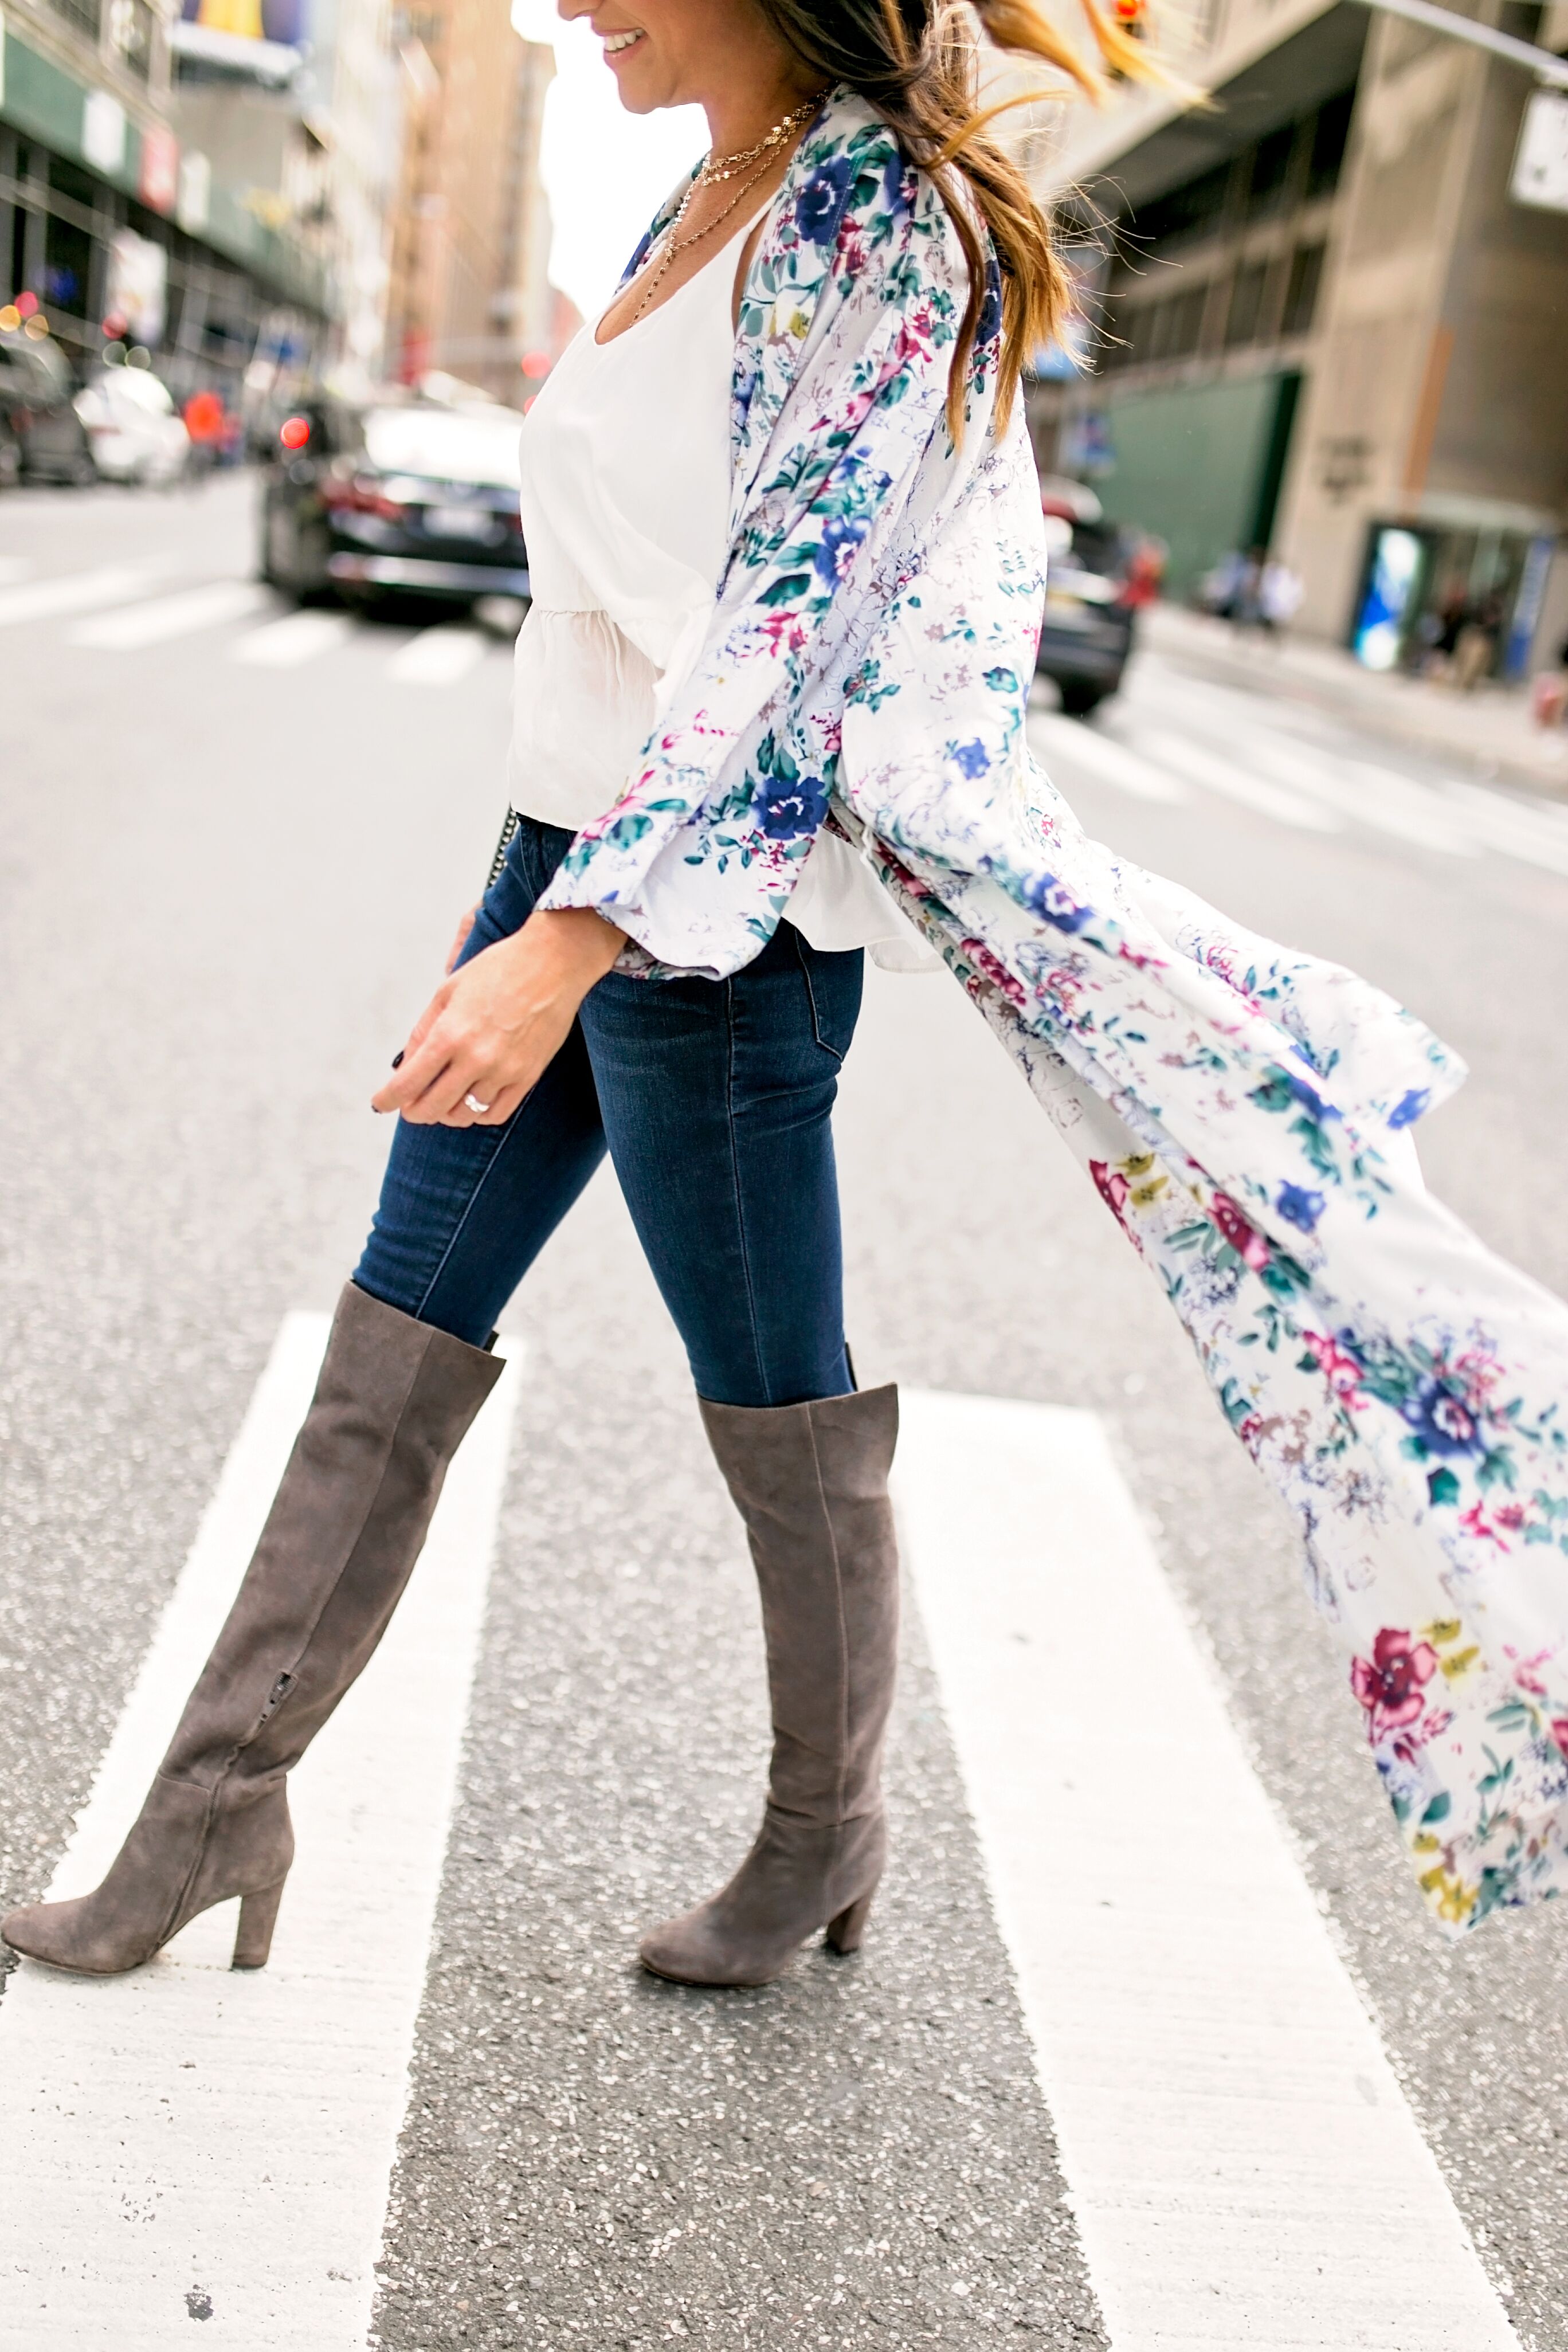 Kimono Crush, jeans, boots